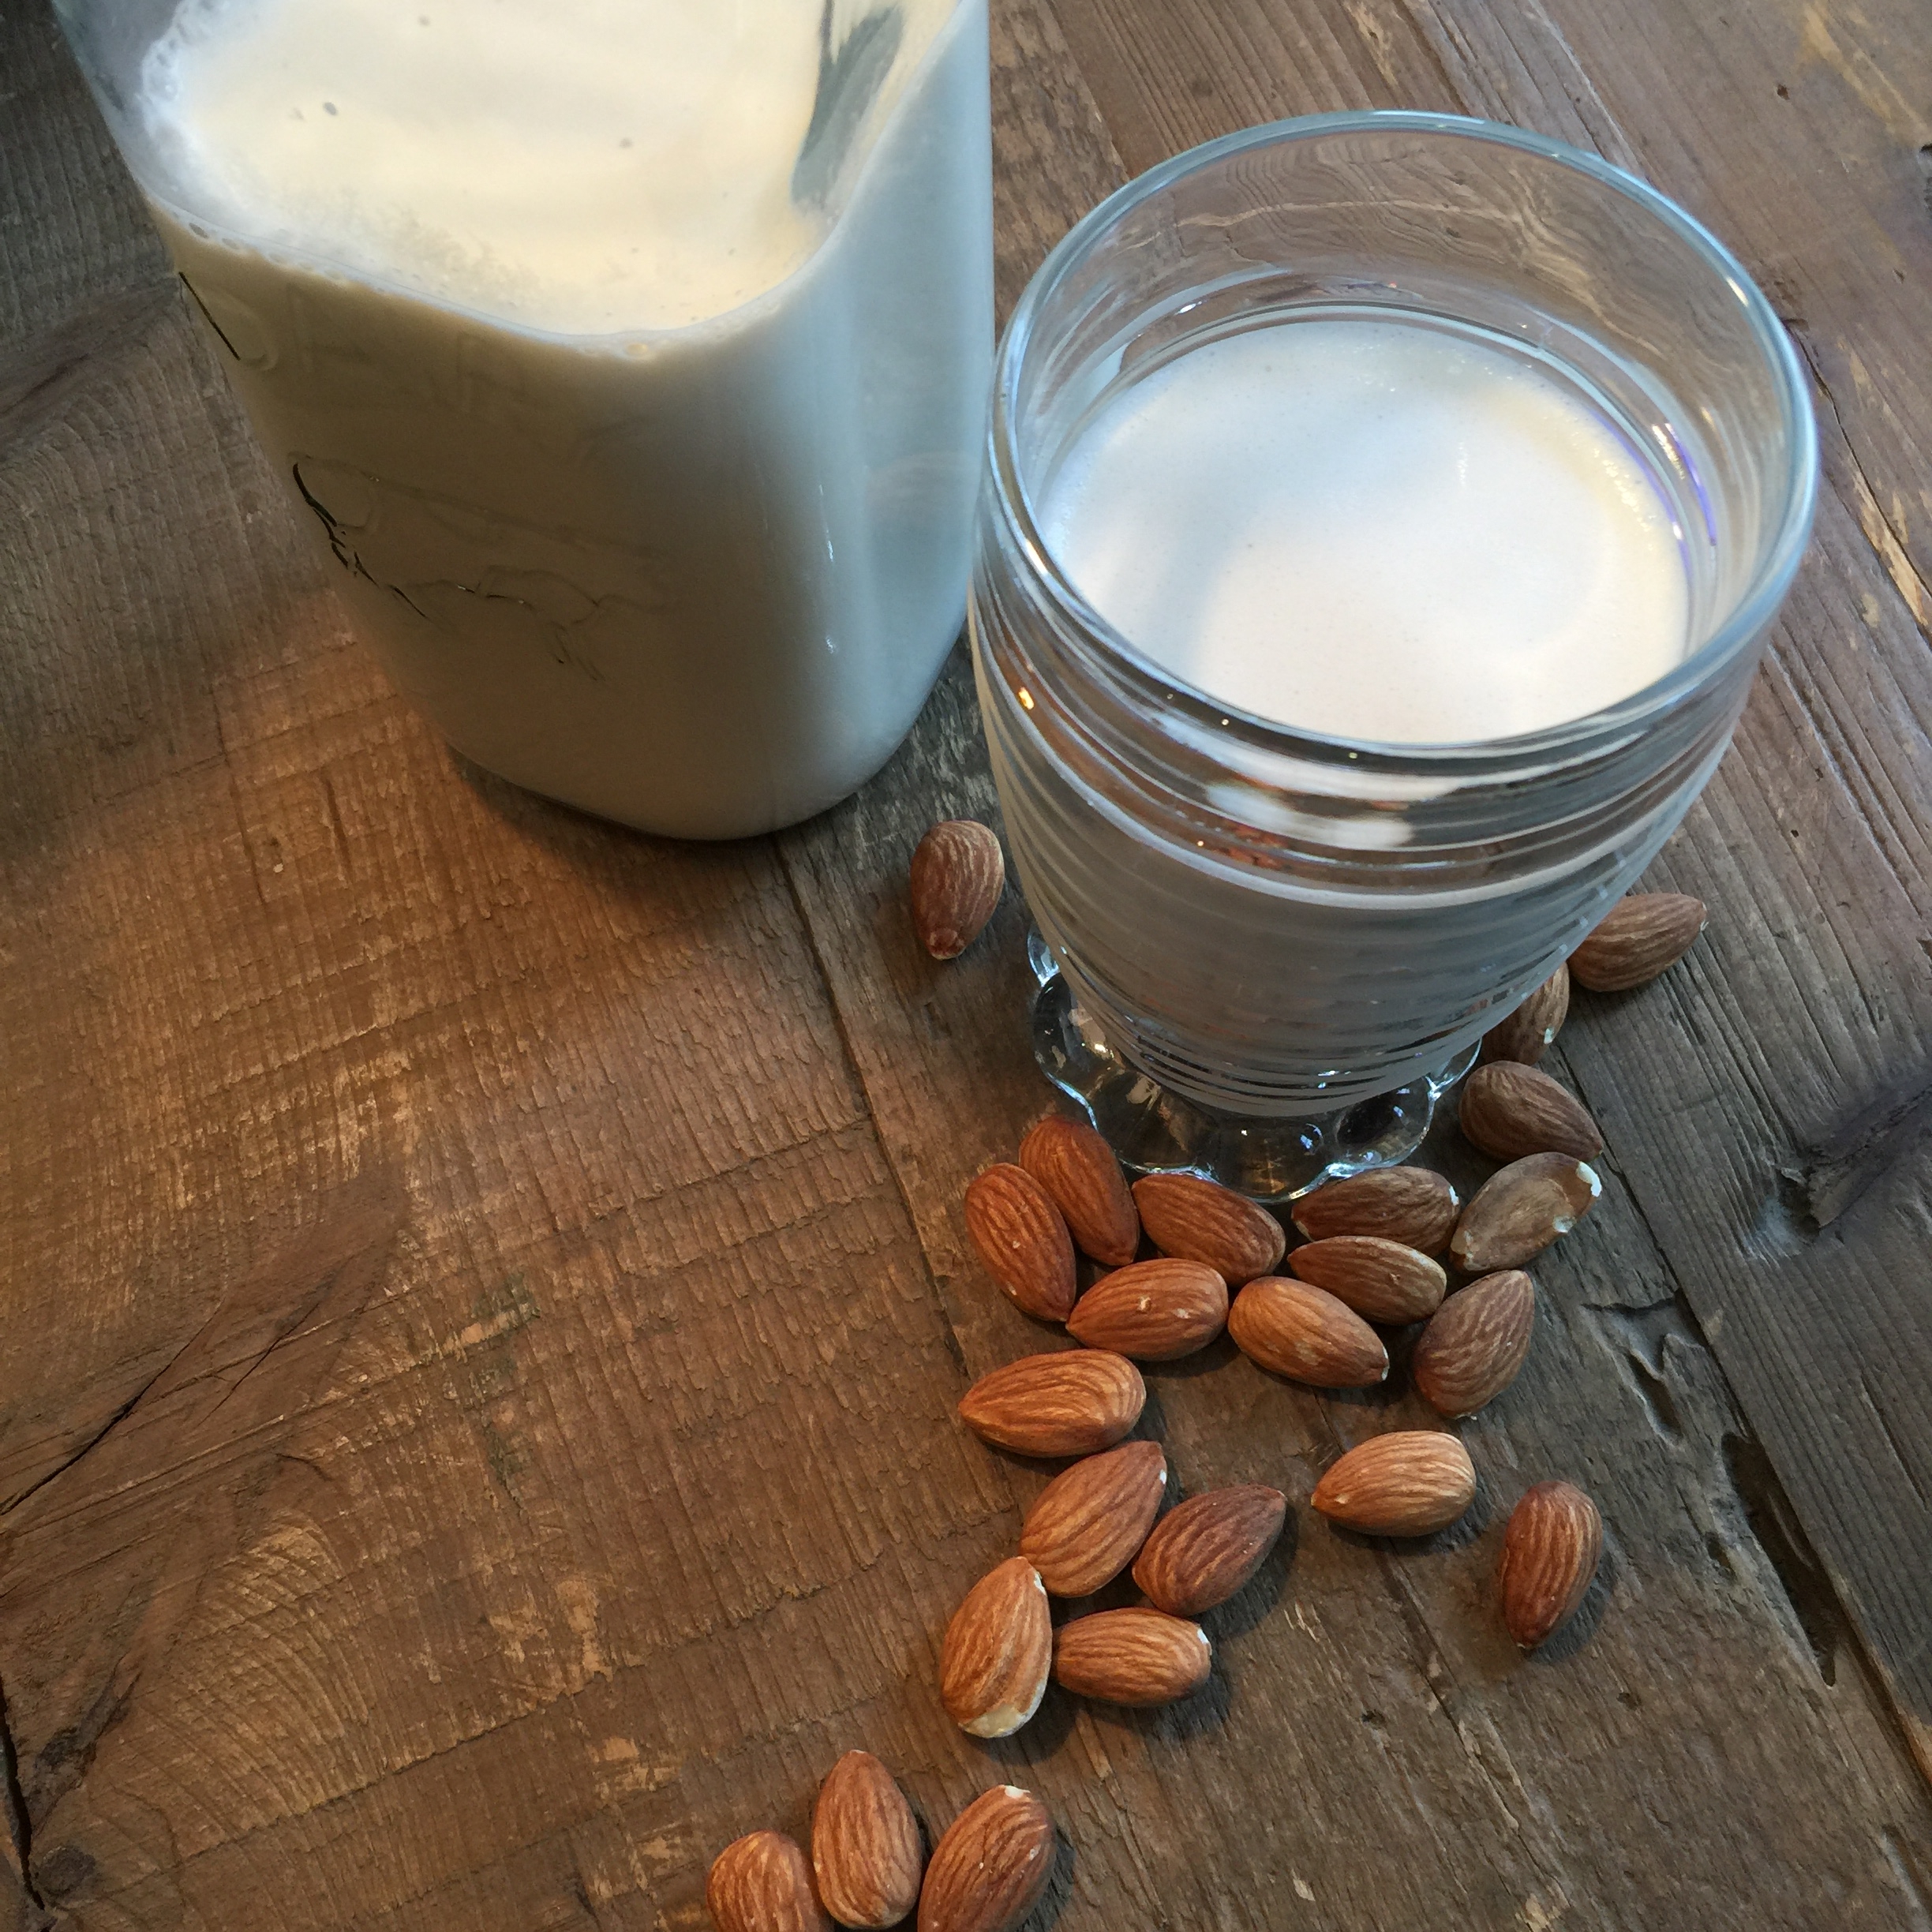 Easy Almond milk recipe, Almond Milk Recipes, almond milk benefits, benefits of almond milk, almond milk nutrition, making almond milk, make almond milk, how do you make almond milk